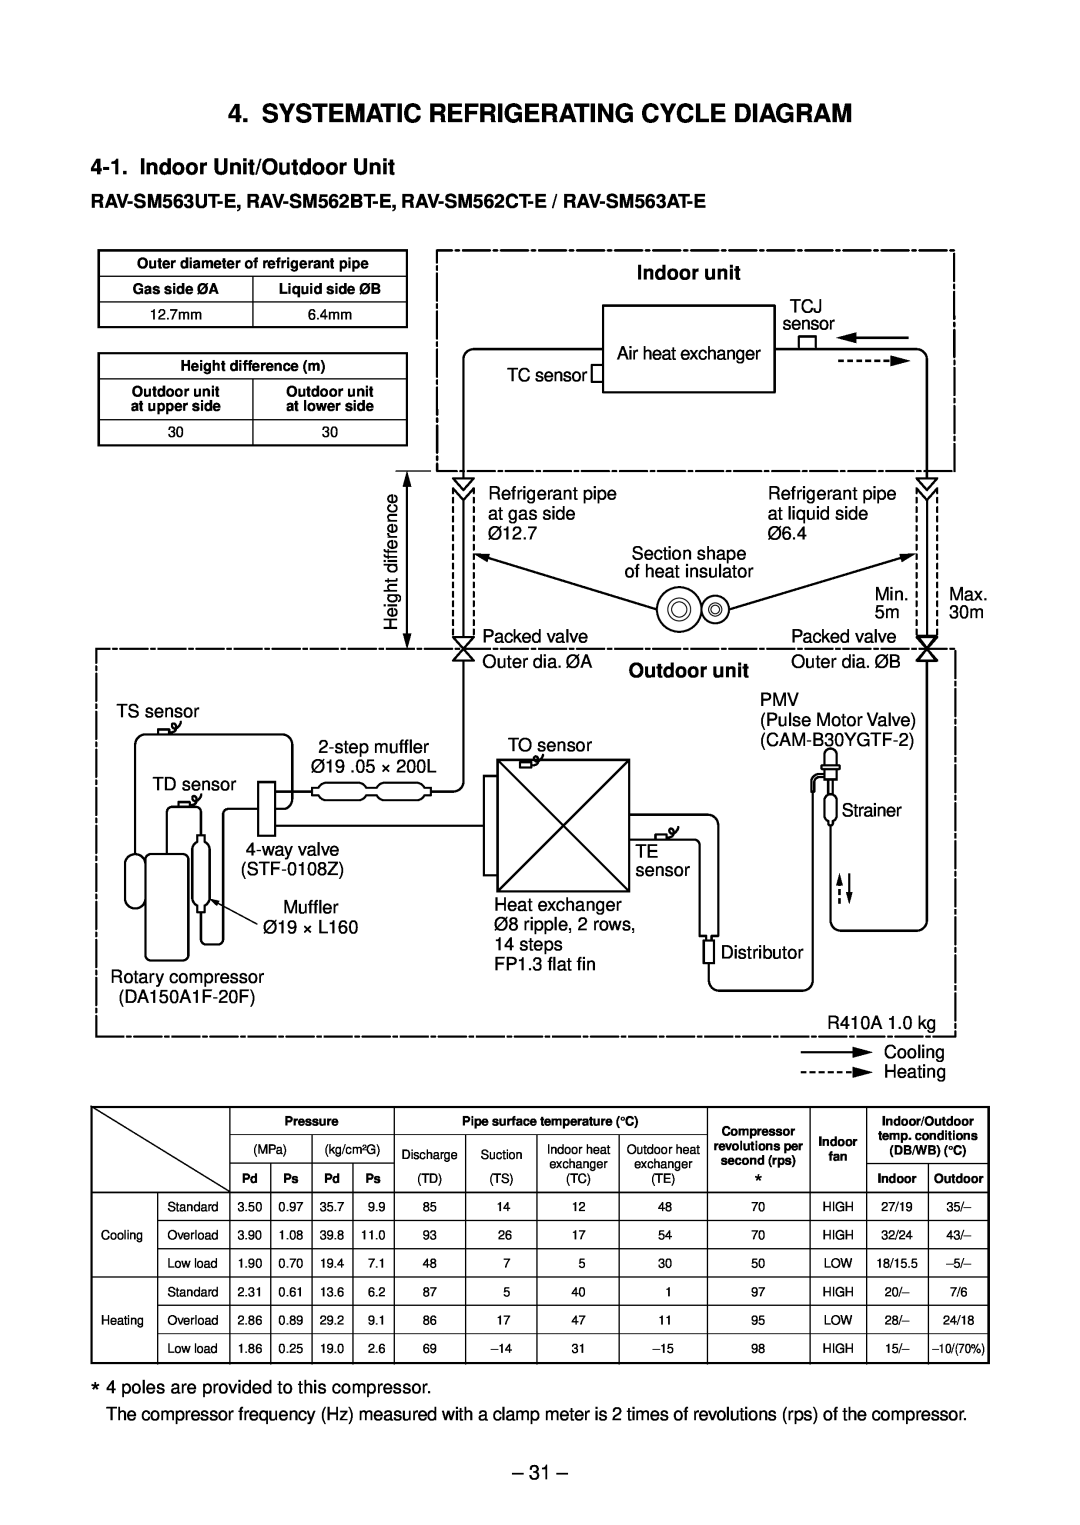 Toshiba RAV-SM1402CT-E, RAV-SM1102CT-E Systematic Refrigerating Cycle Diagram, Indoor Unit/Outdoor Unit, Indoor unit 